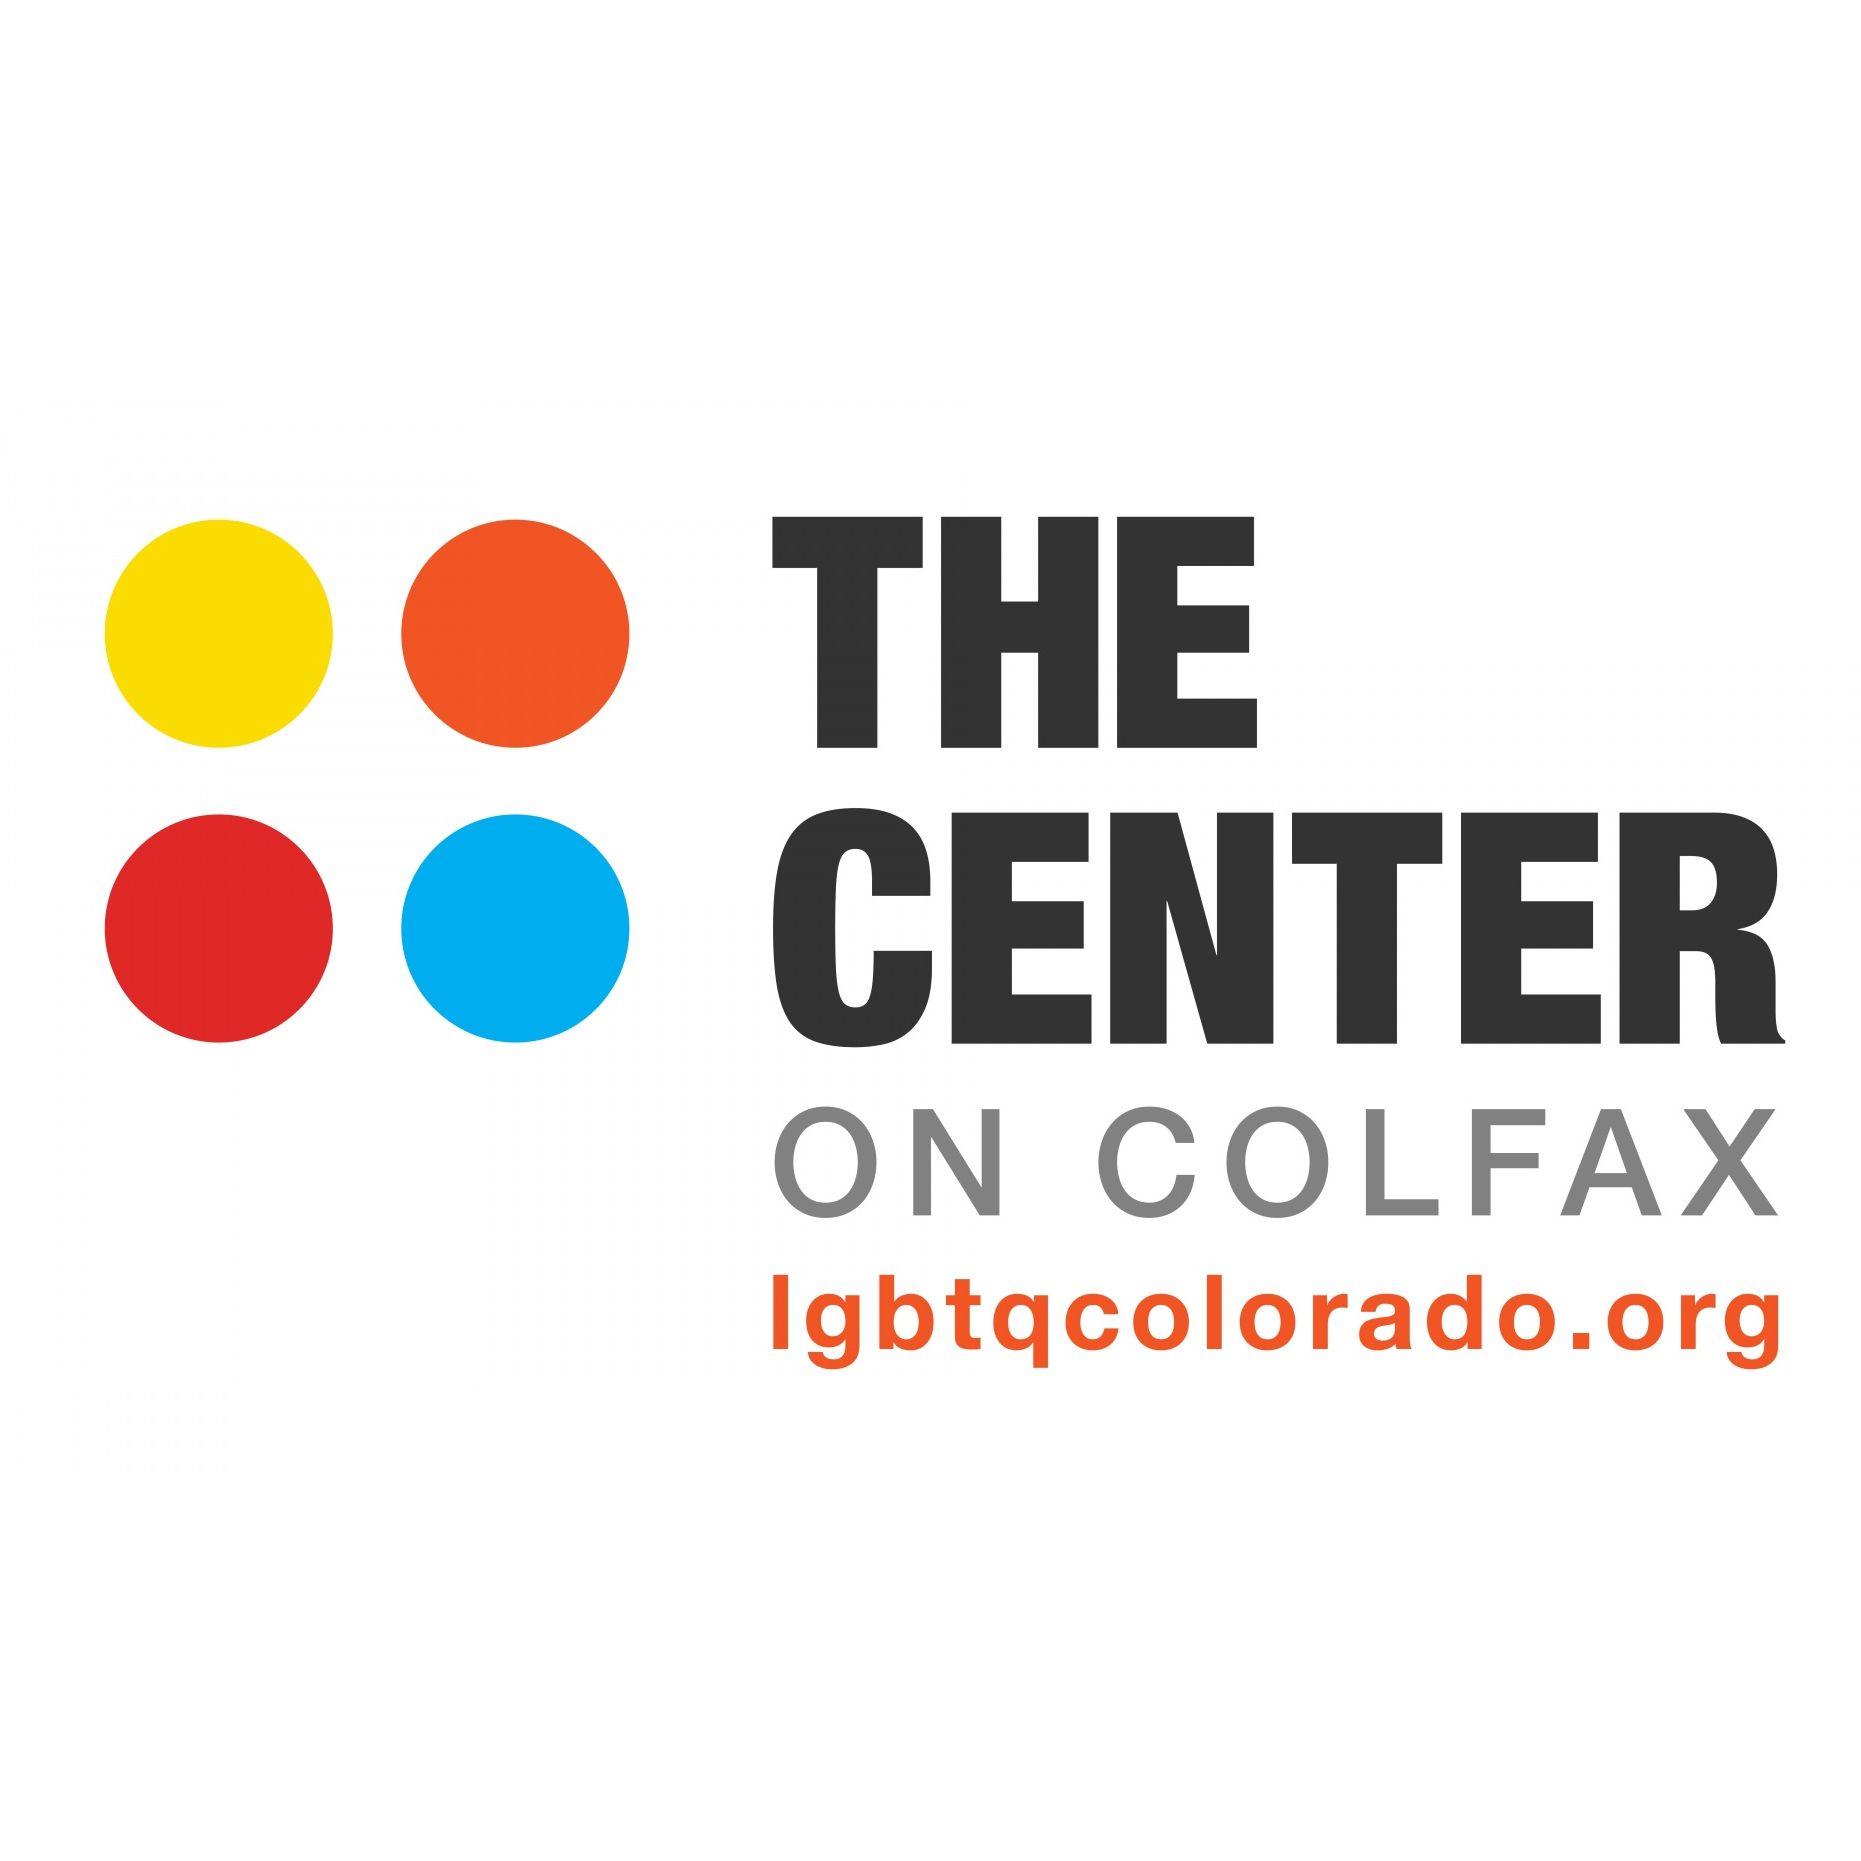 LGBTQ Organizations in Colorado - The Center on Colfax